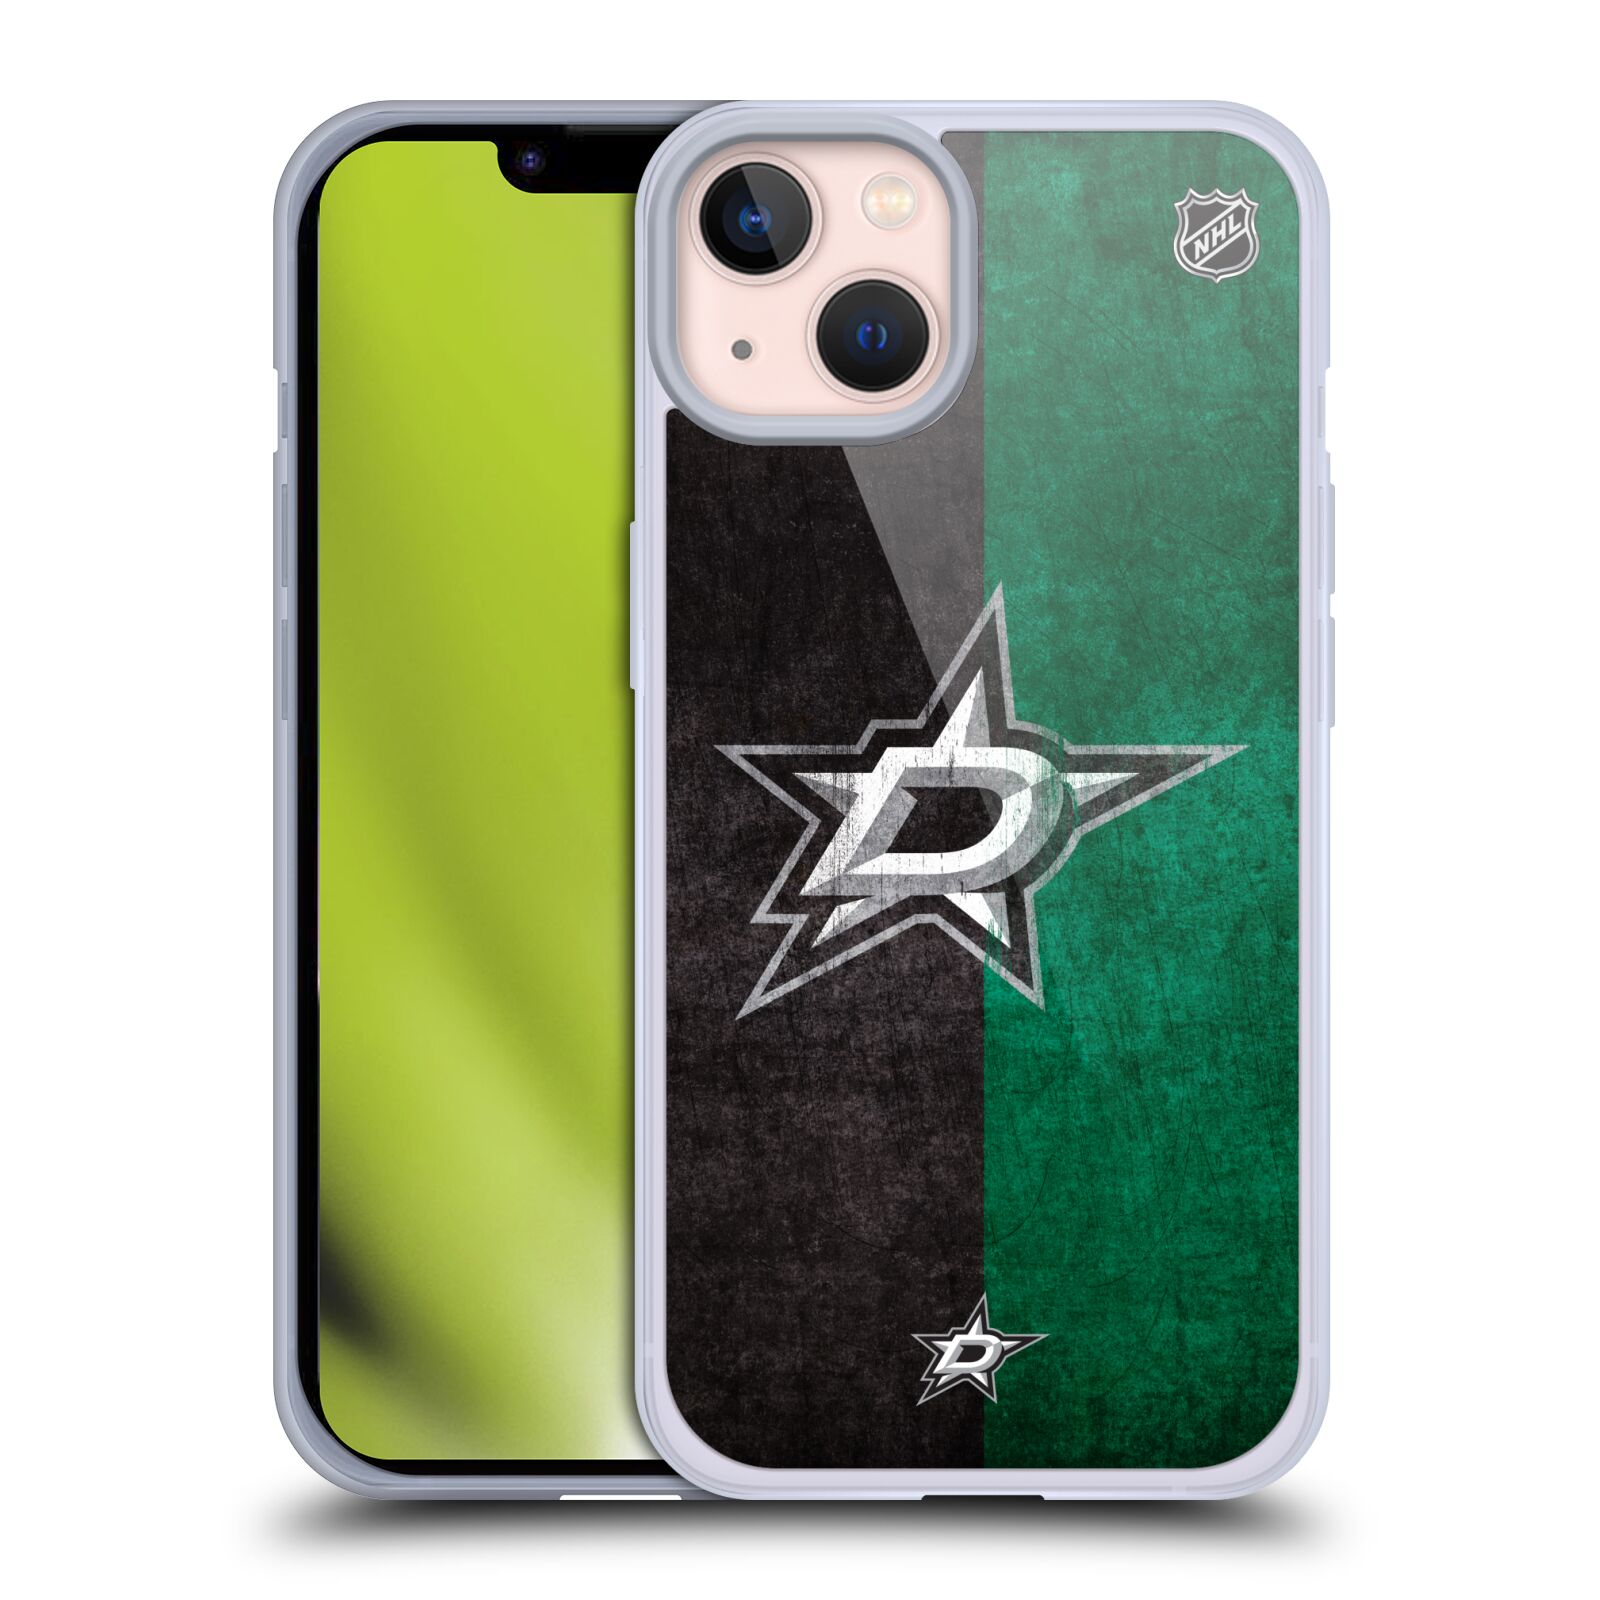 Silikonové pouzdro na mobil Apple iPhone 13 - NHL - Půlené logo Dallas Stars (Silikonový kryt, obal, pouzdro na mobilní telefon Apple iPhone 13 s licencovaným motivem NHL - Půlené logo Dallas Stars)